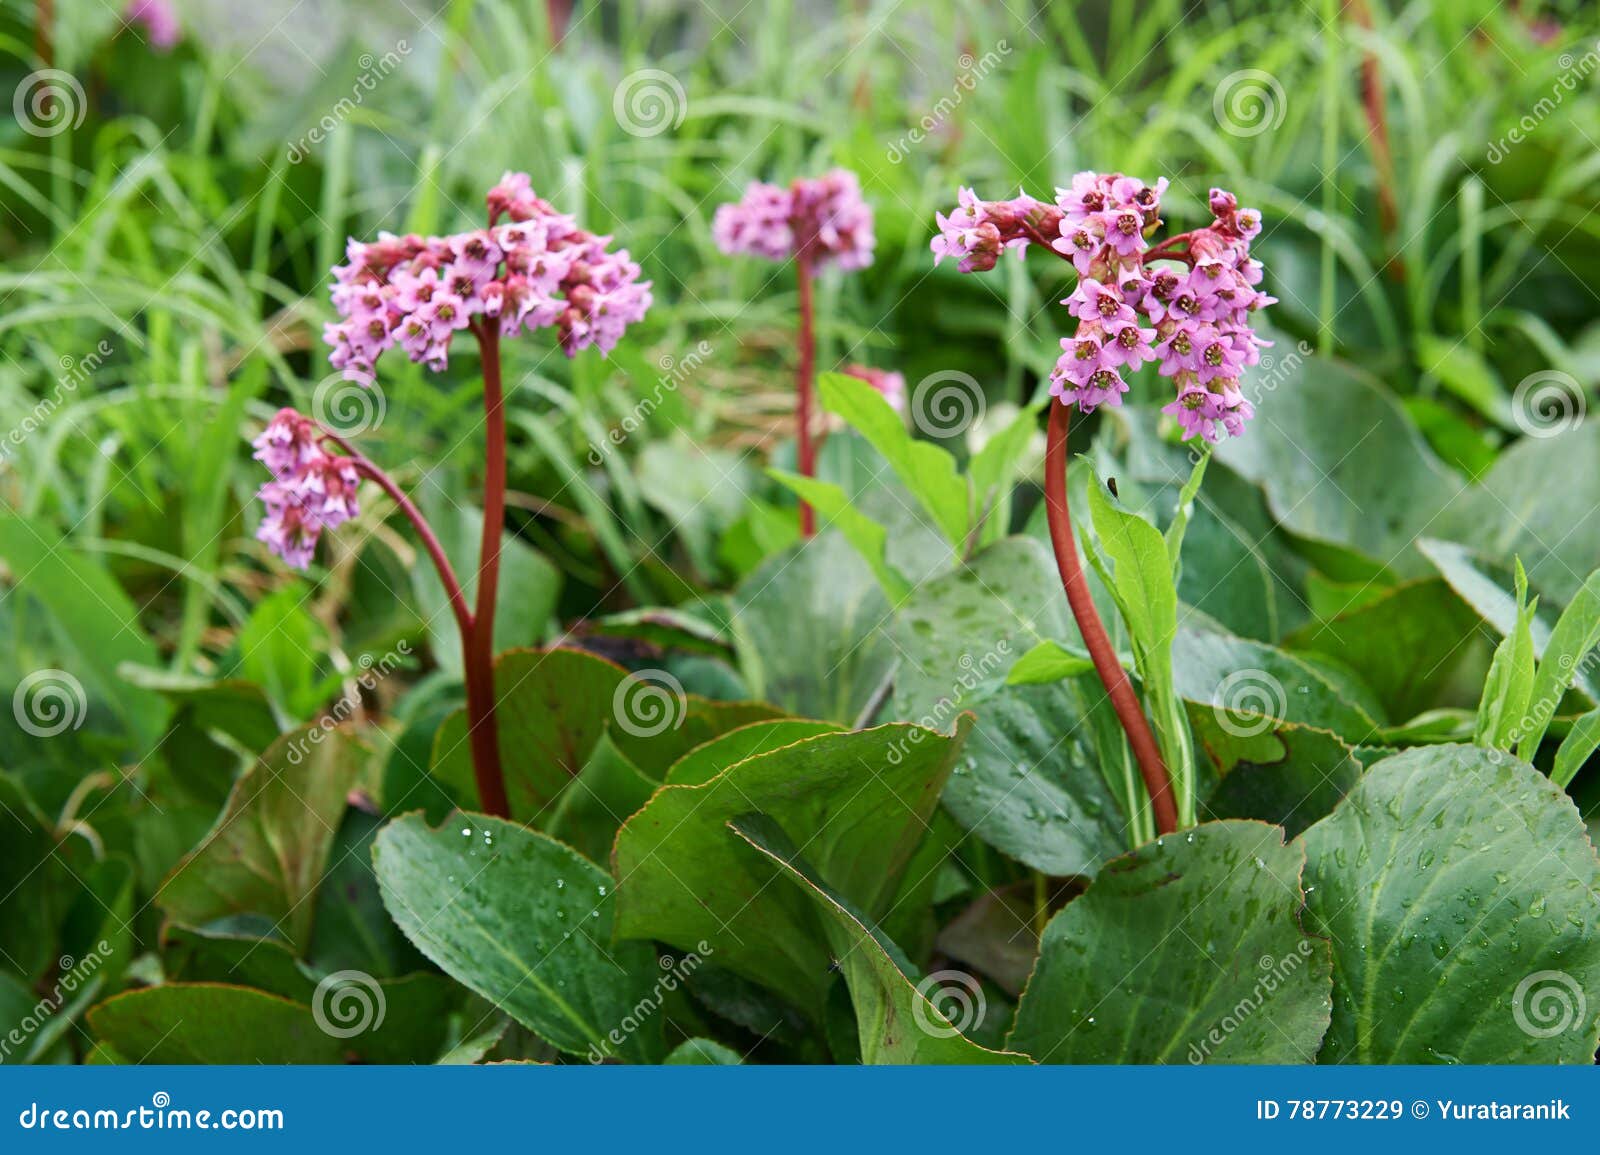 bergenia cordifolia (bergenia crassifolia, the badan, siberian t